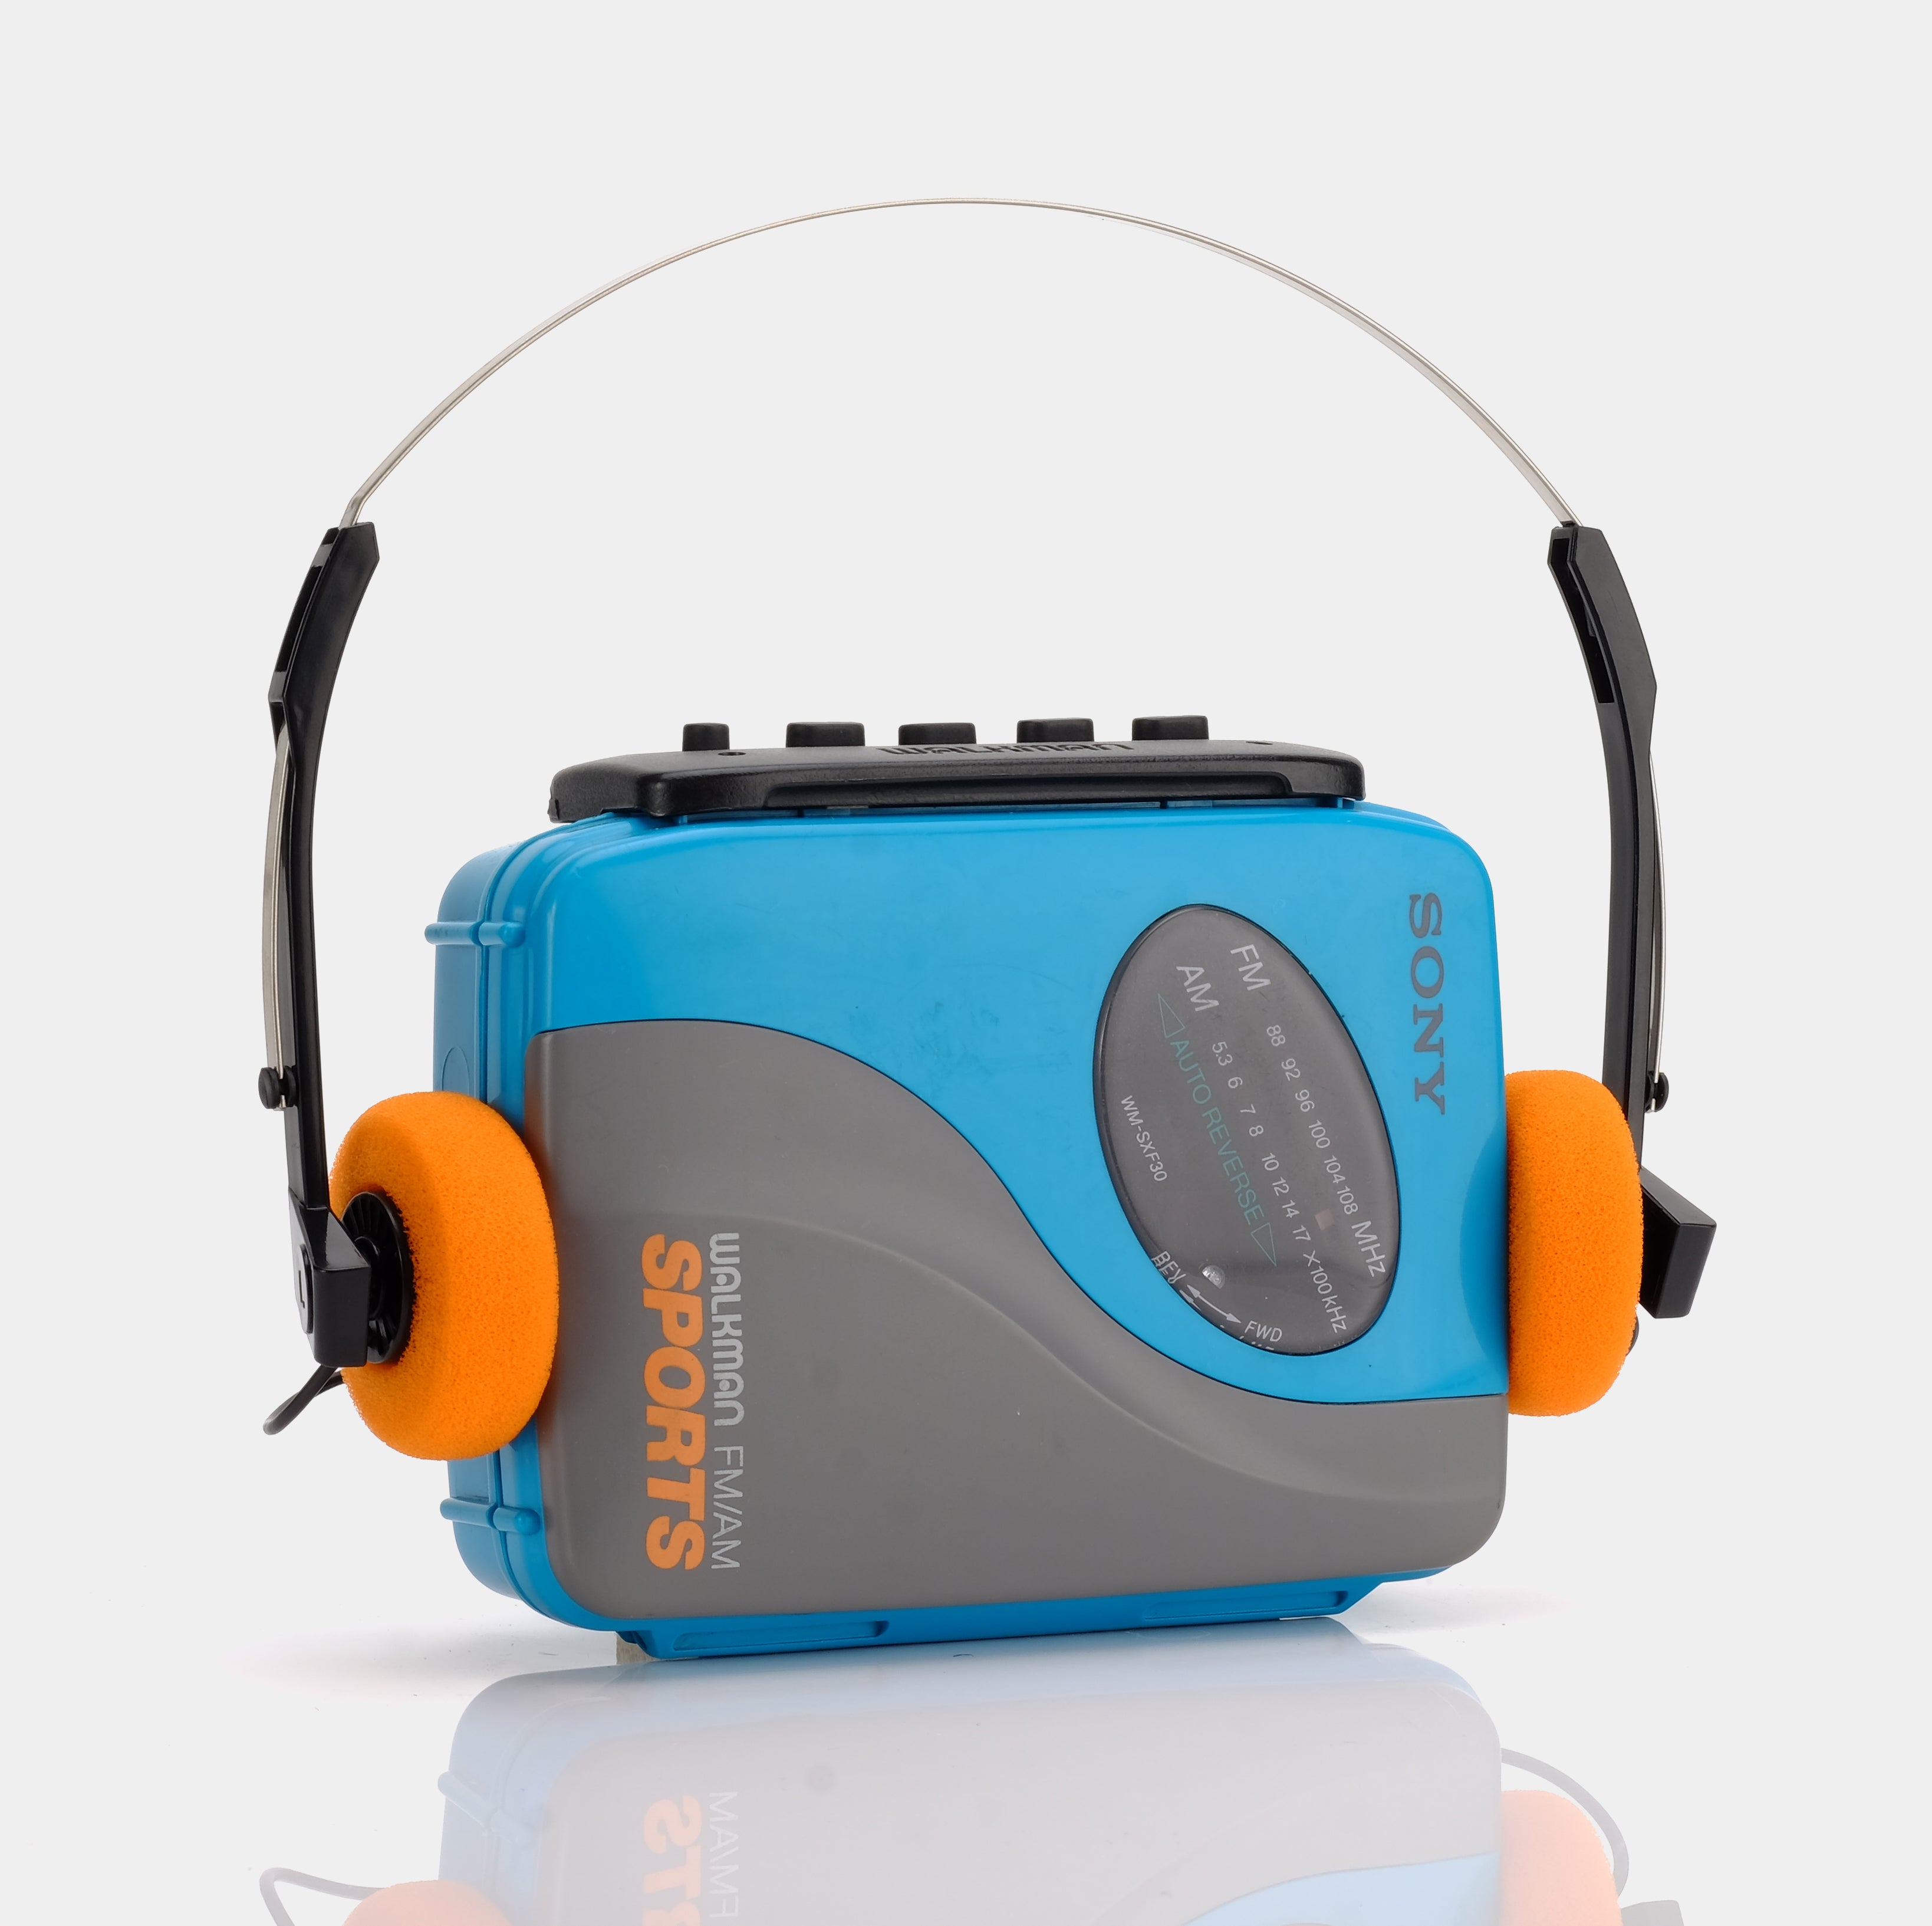 Sony Sports Walkman WM-SXF30 Blue AM/FM Portable Cassette Player